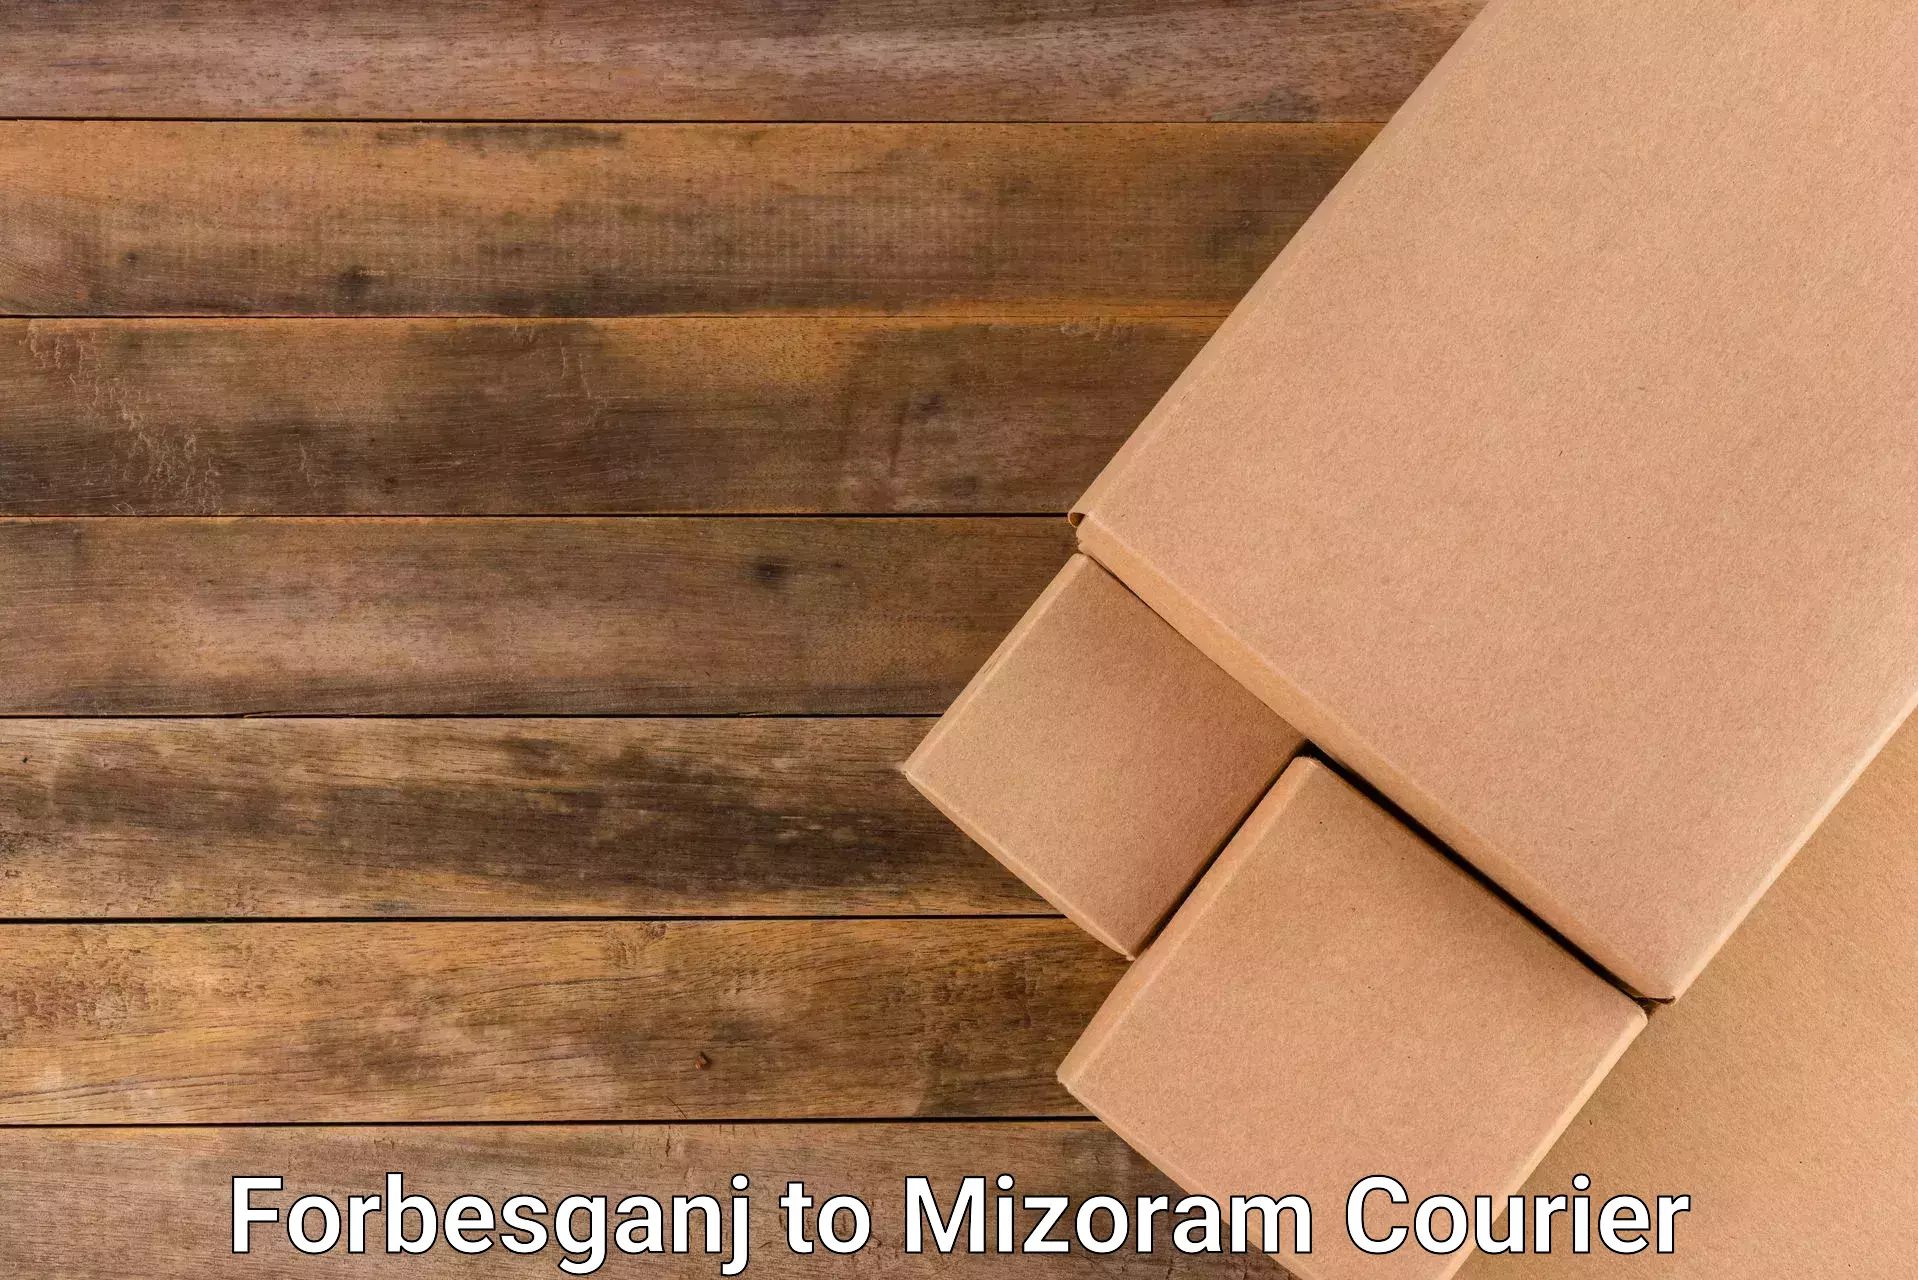 Cash on delivery service in Forbesganj to Mizoram